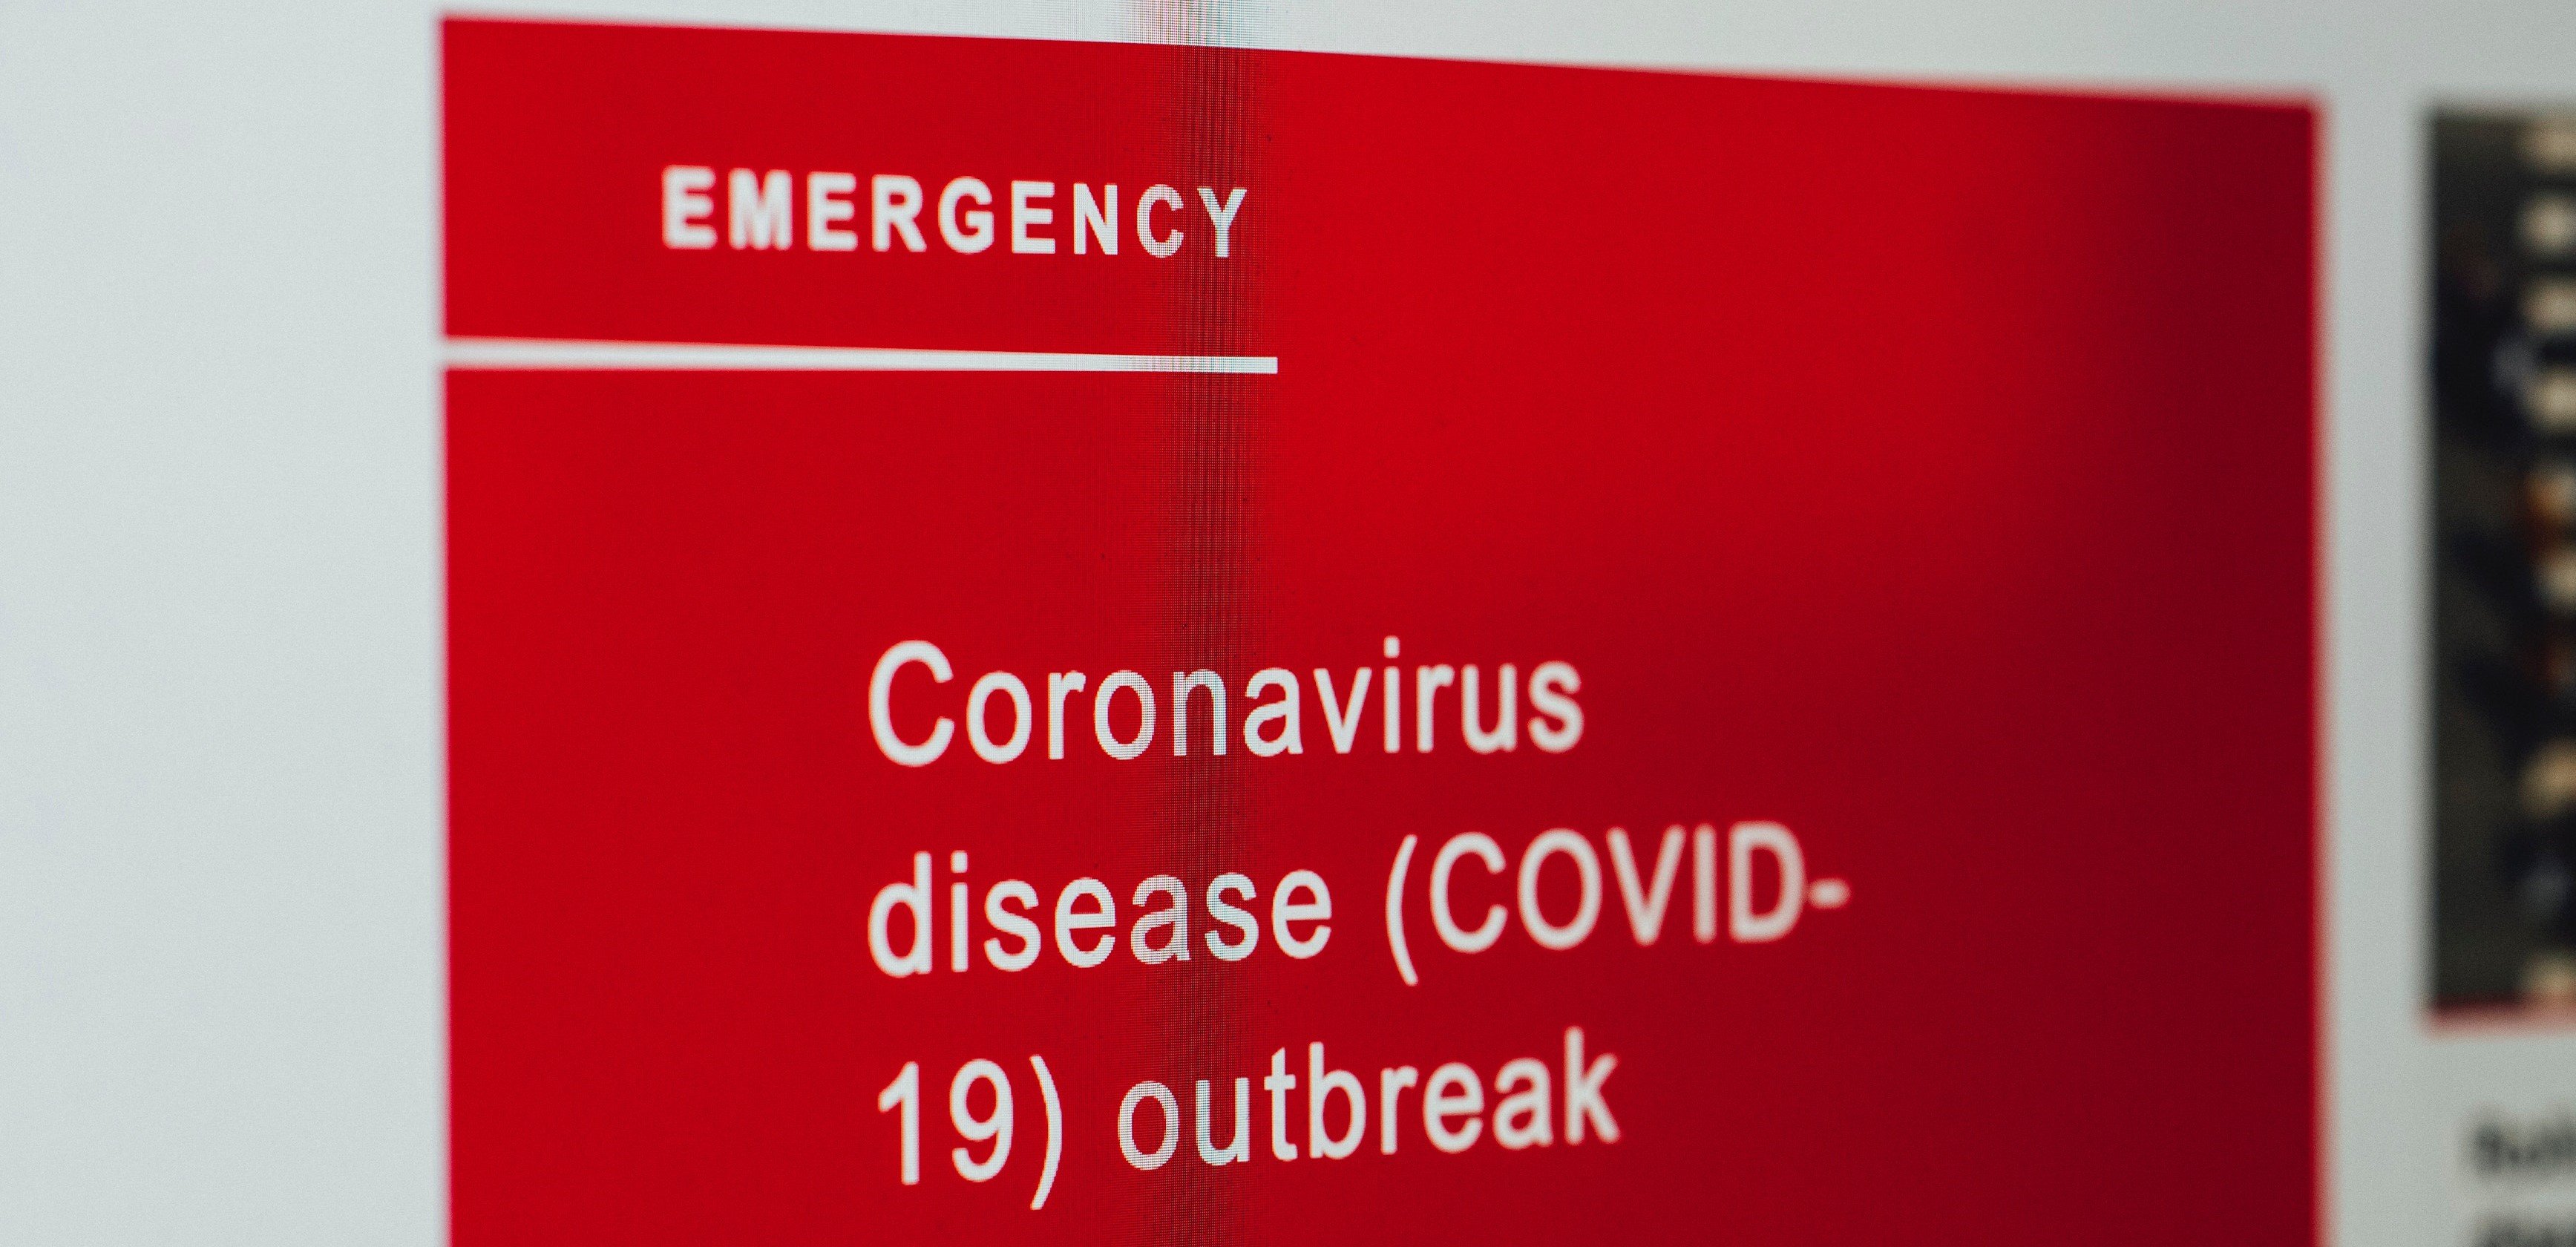 coronavirus-news-on-screen-3970332 - Copy